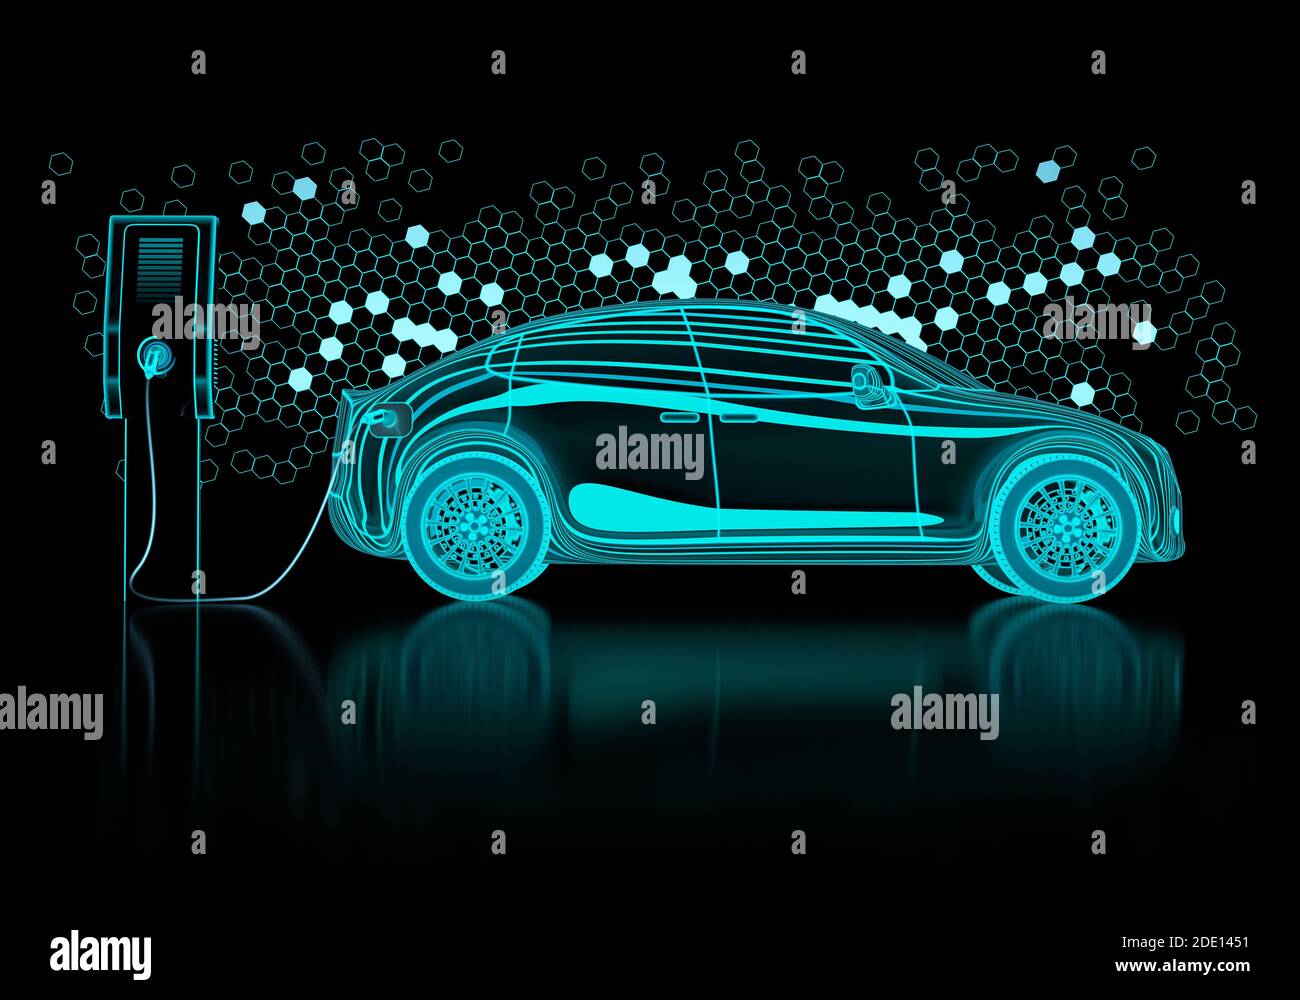 Electric car charging, illustration Stock Photo